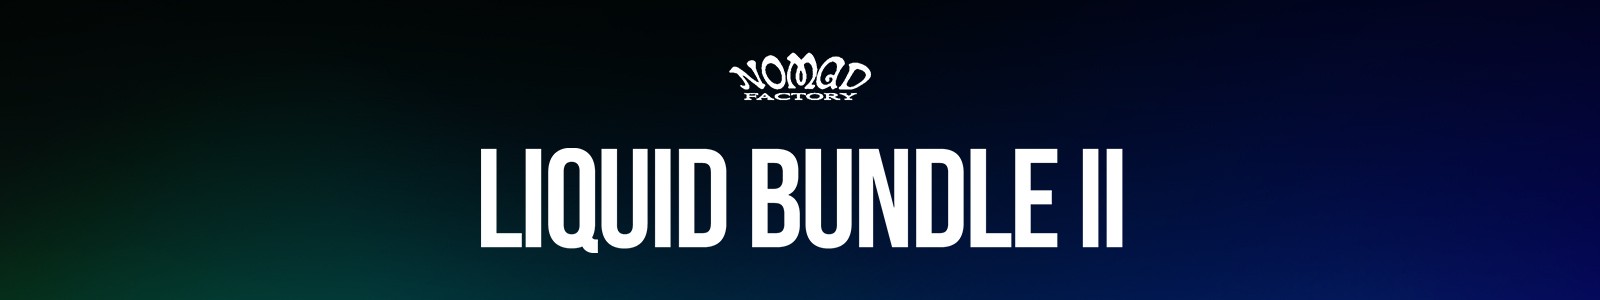 Liquid Bundle II by Nomad Factory